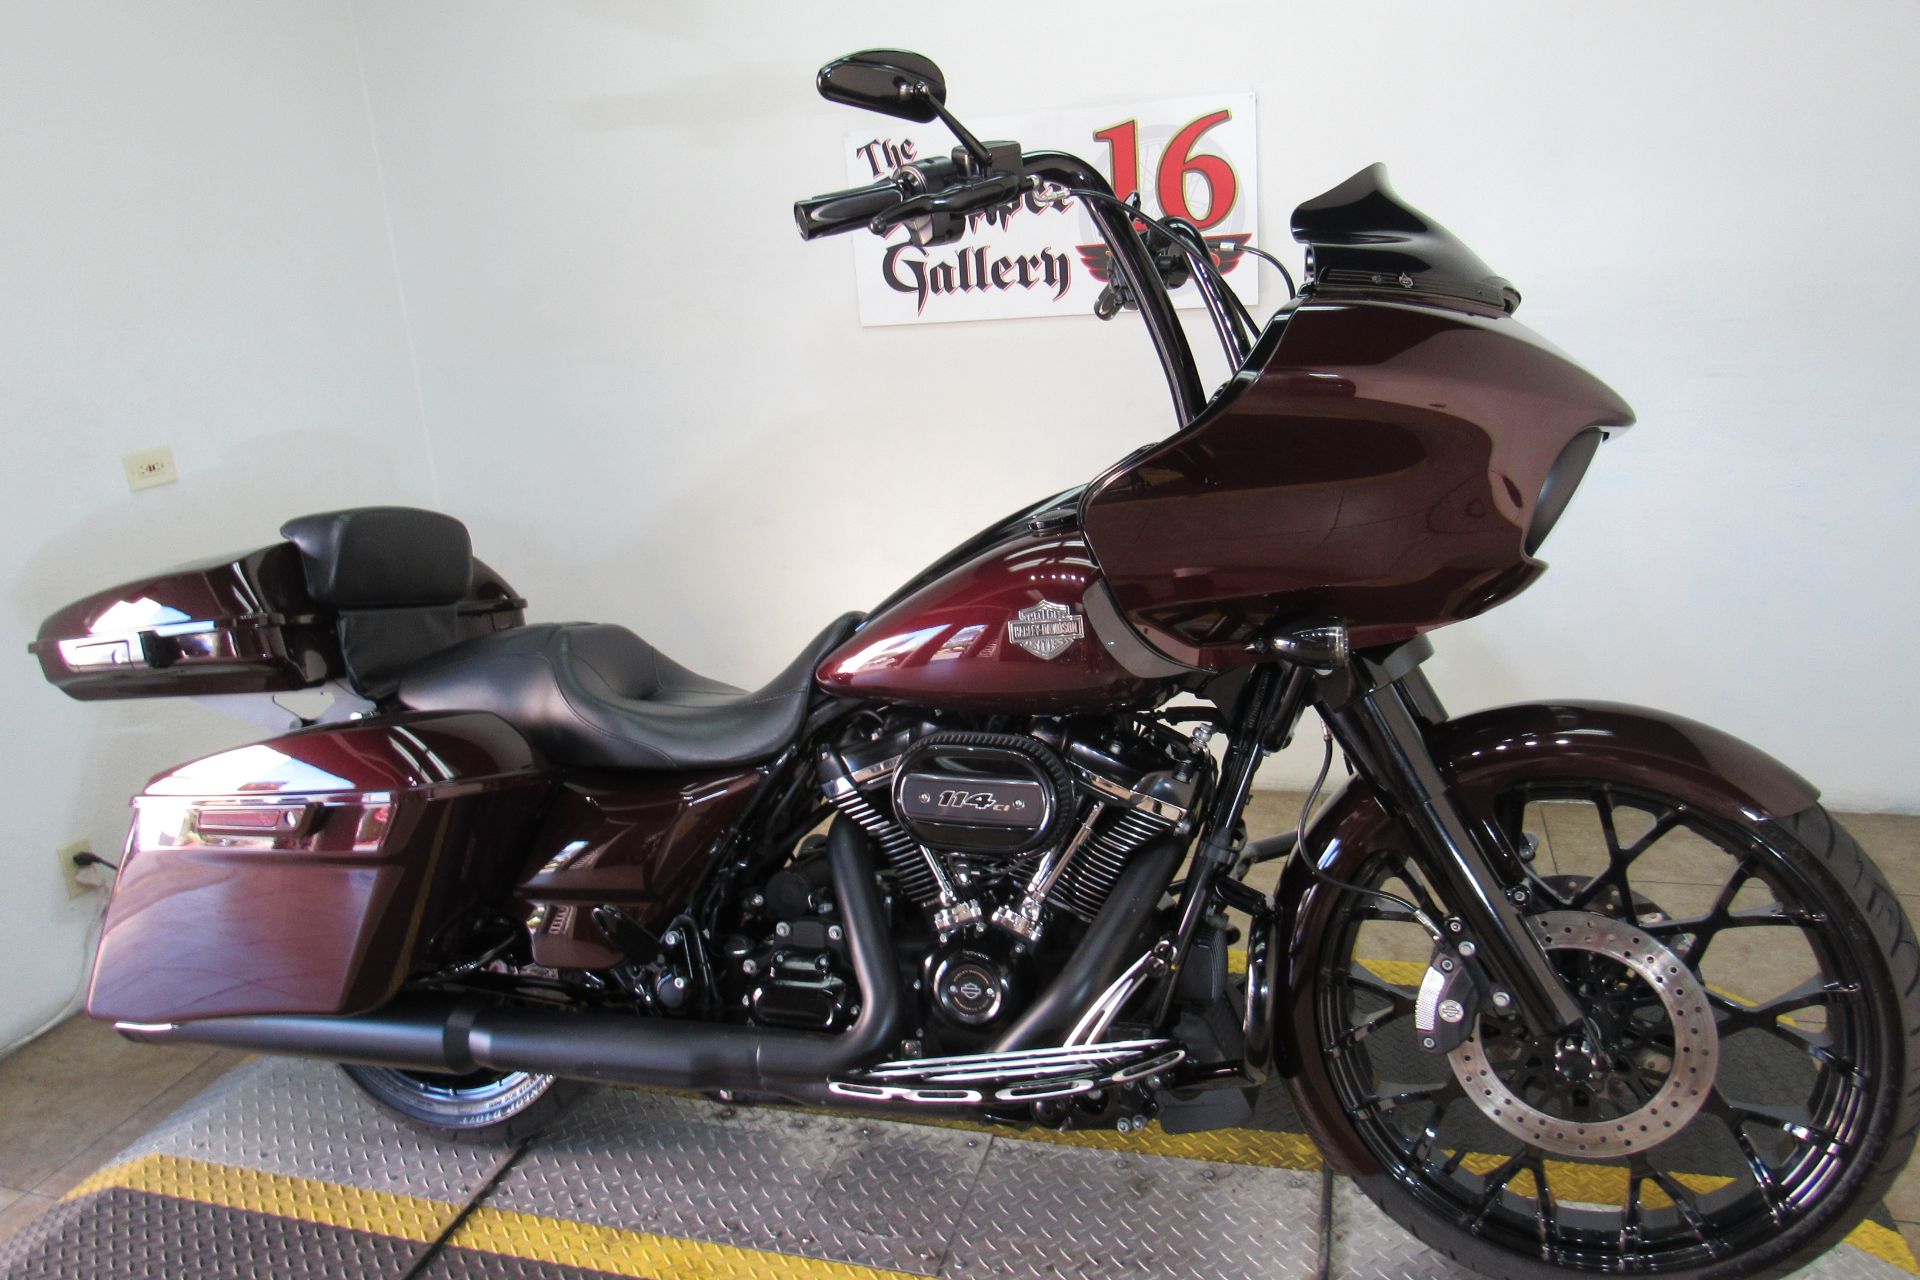 2021 Harley-Davidson Road Glide® Special in Temecula, California - Photo 5